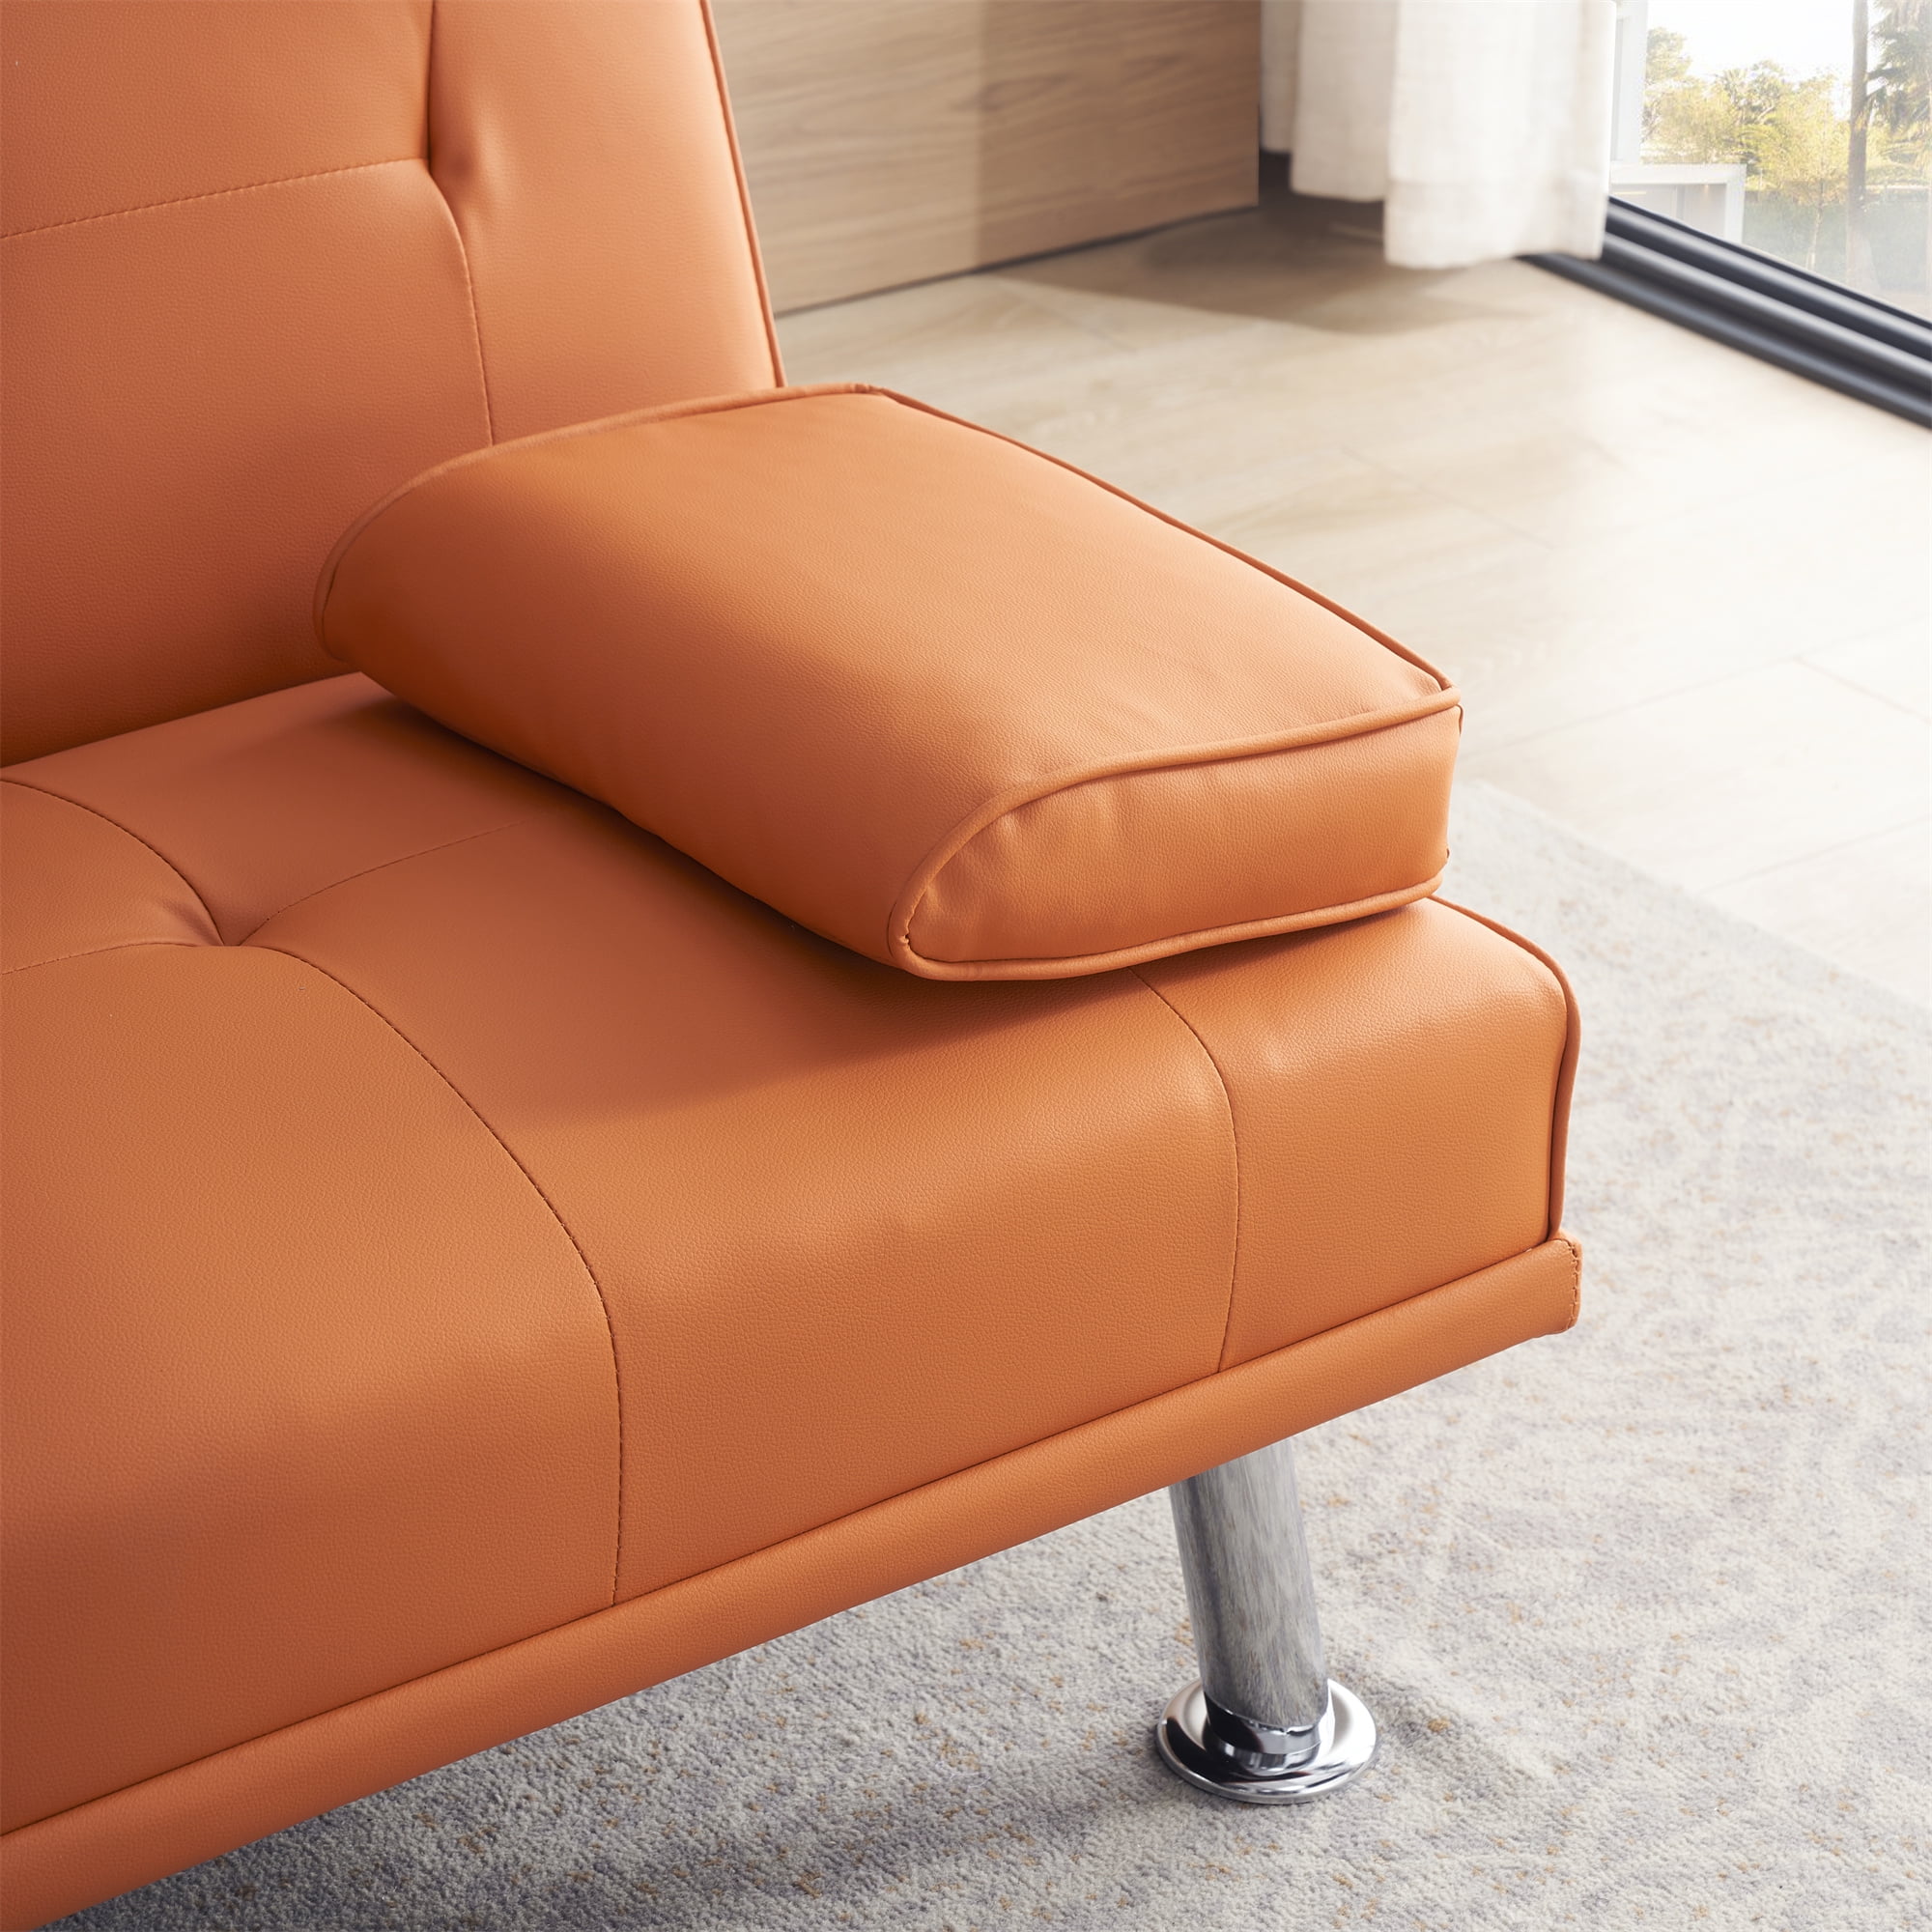 Orange Sofa Bed Velcro Fixed Arms Sleeper Loveseat w/ Coffee Table